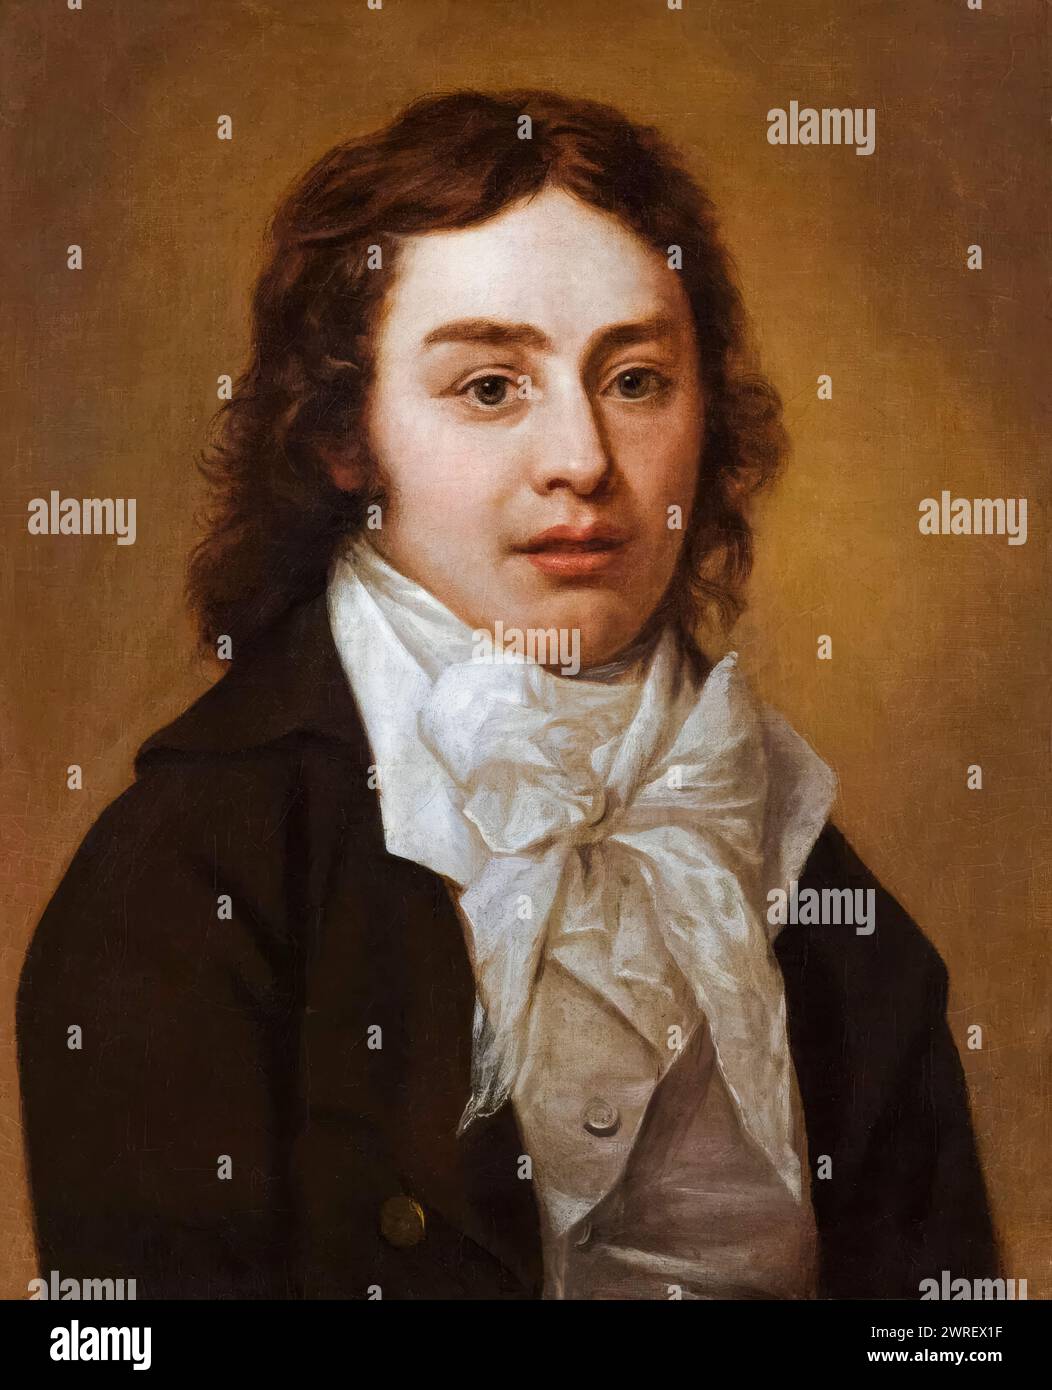 Samuel Taylor Coleridge (1772-1834), English Romantic poet, portrait painting in oil on canvas by Peter Vandyke, circa 1795 Stock Photo